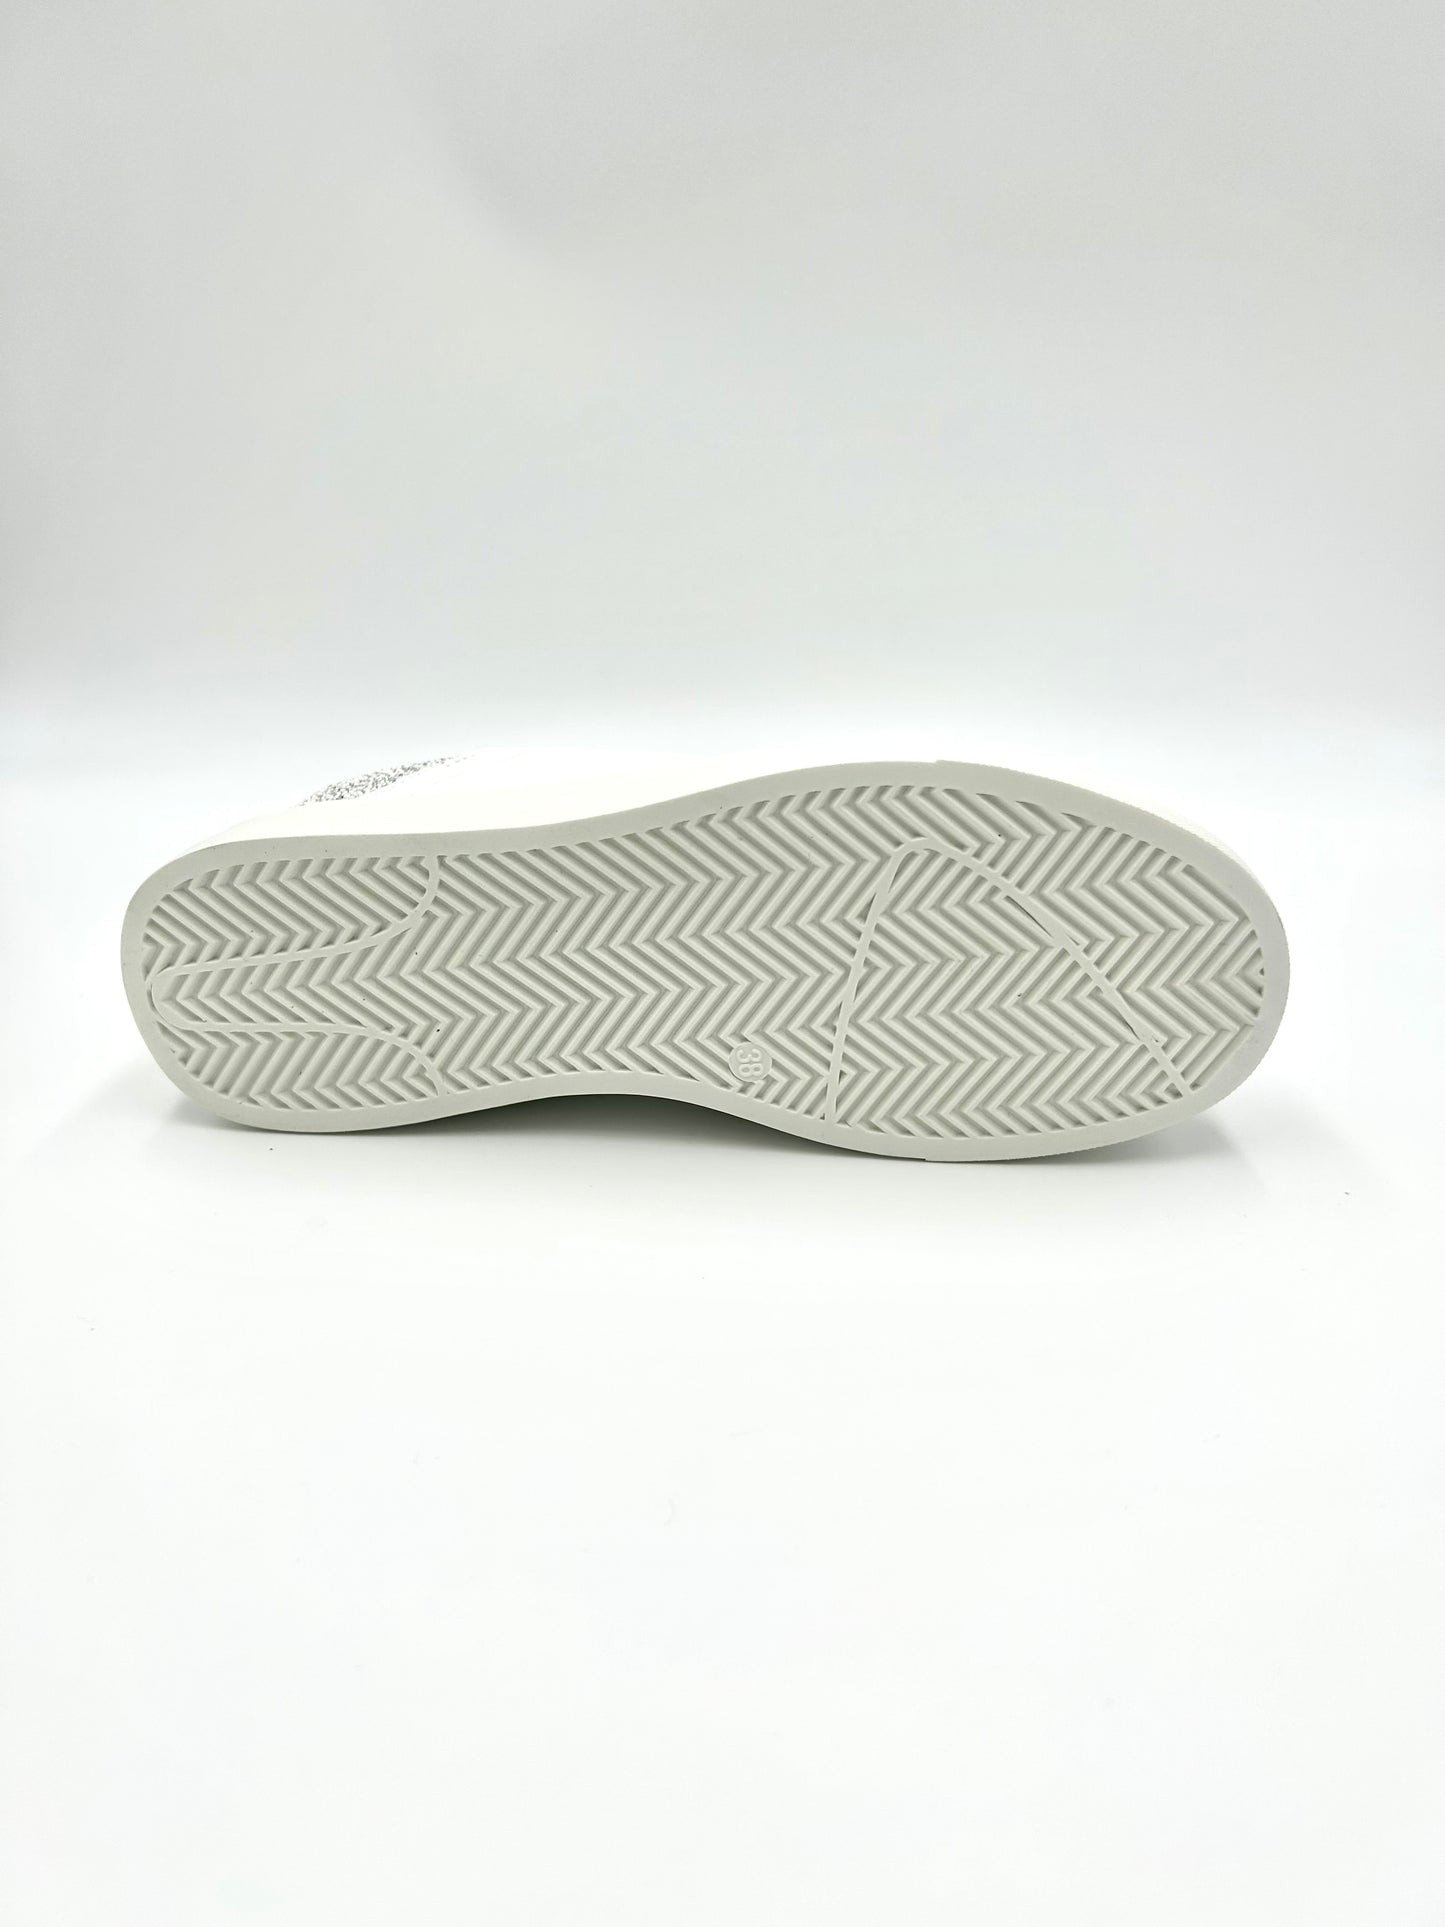 Rucoline Sneakers donna GB539 - White and glitter silver - Rucoline